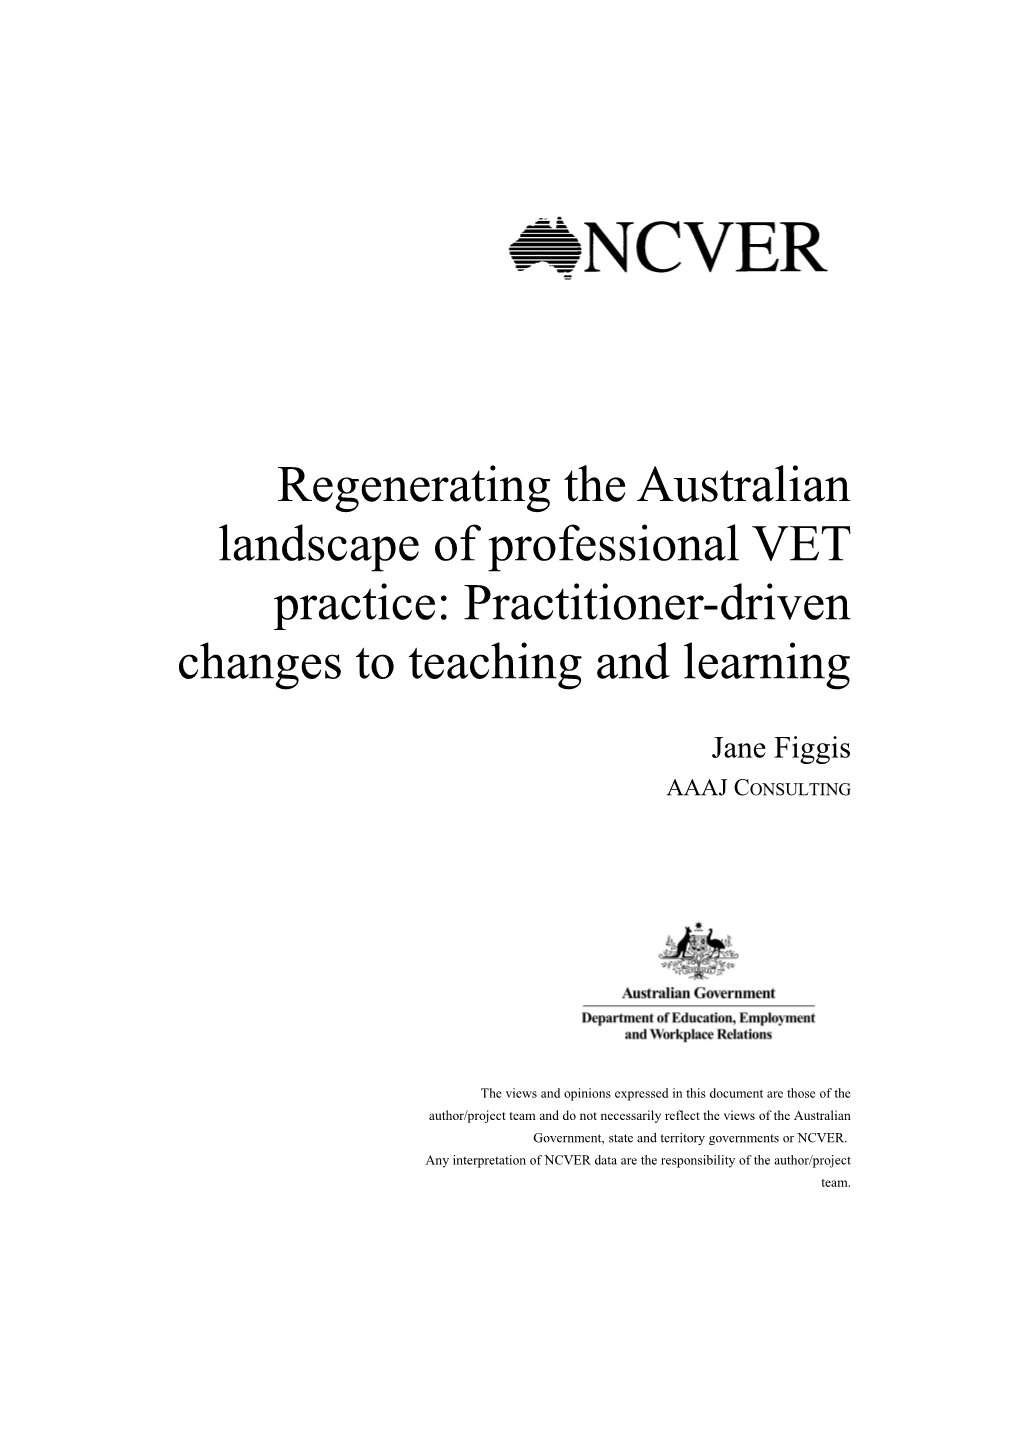 Regenerating the Australian Landscape of Professional VET Practice